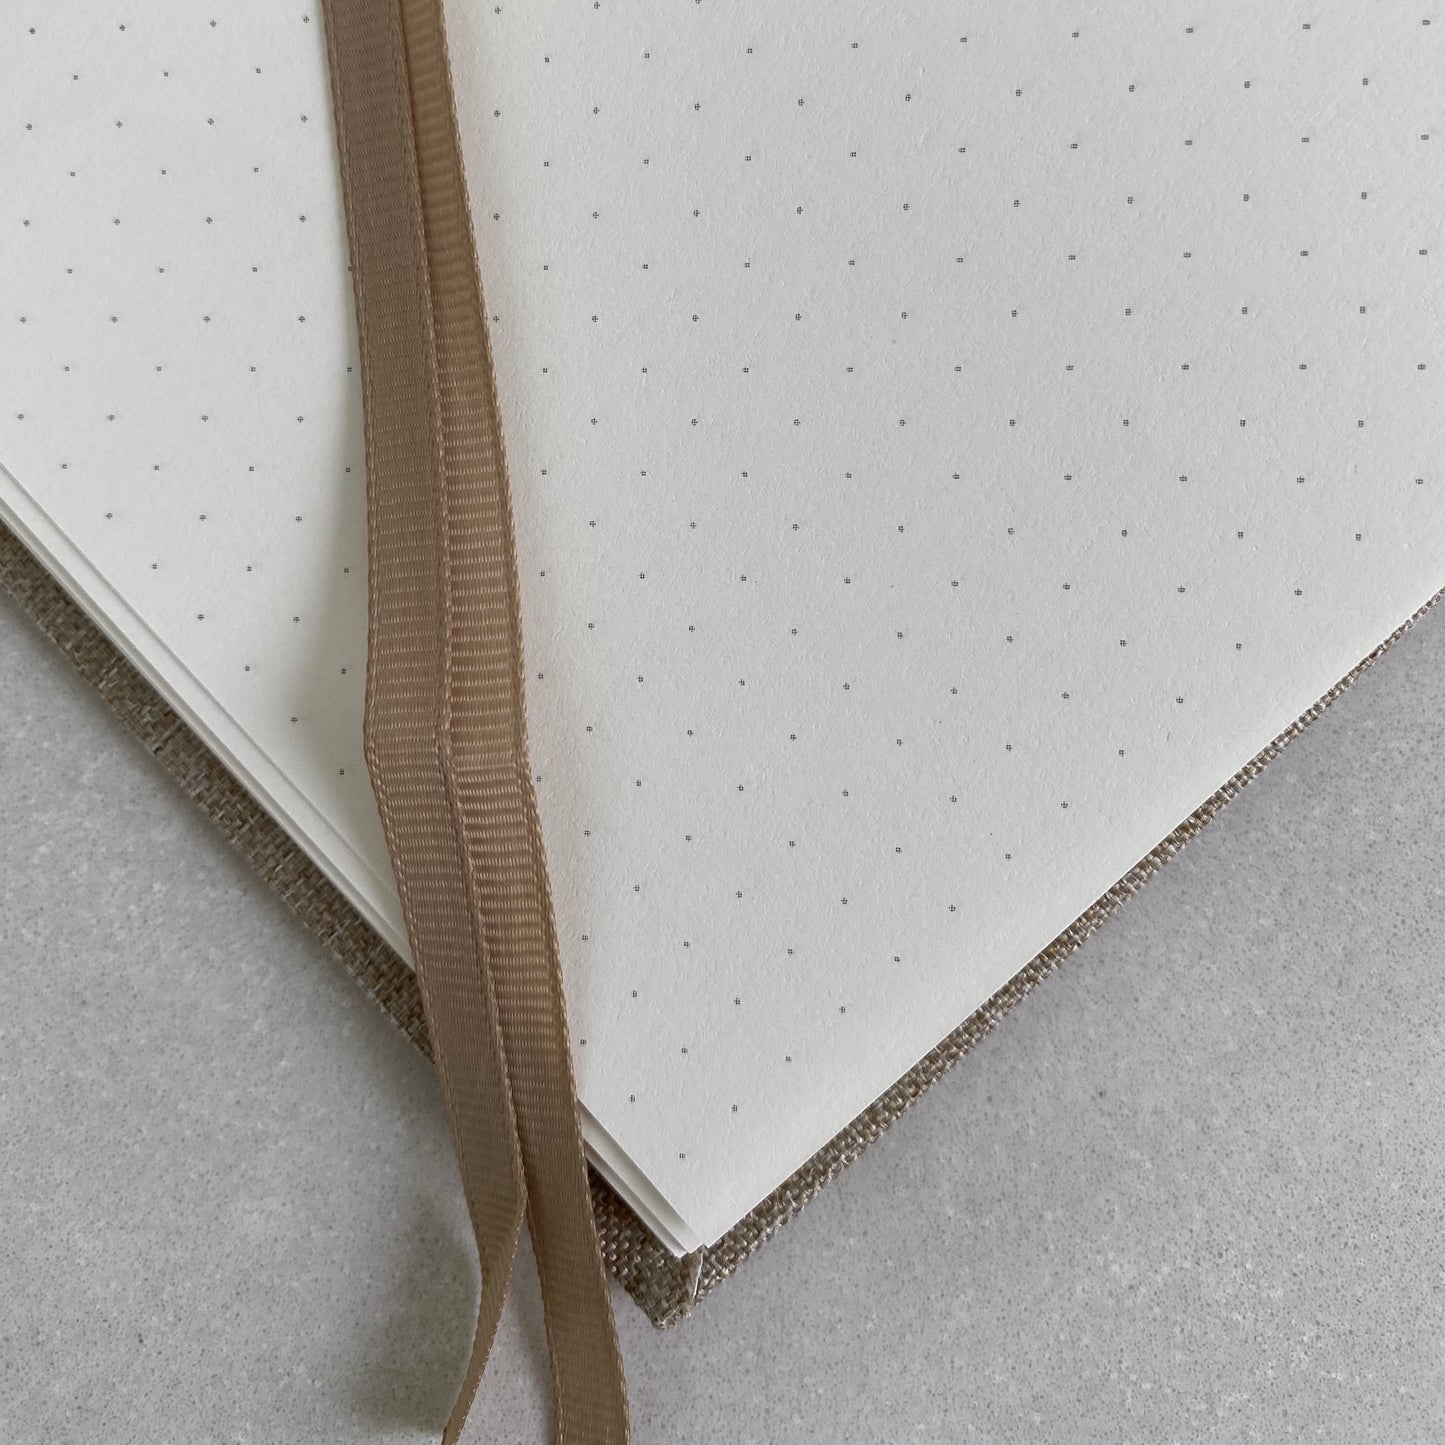 The Lux Linen Journals